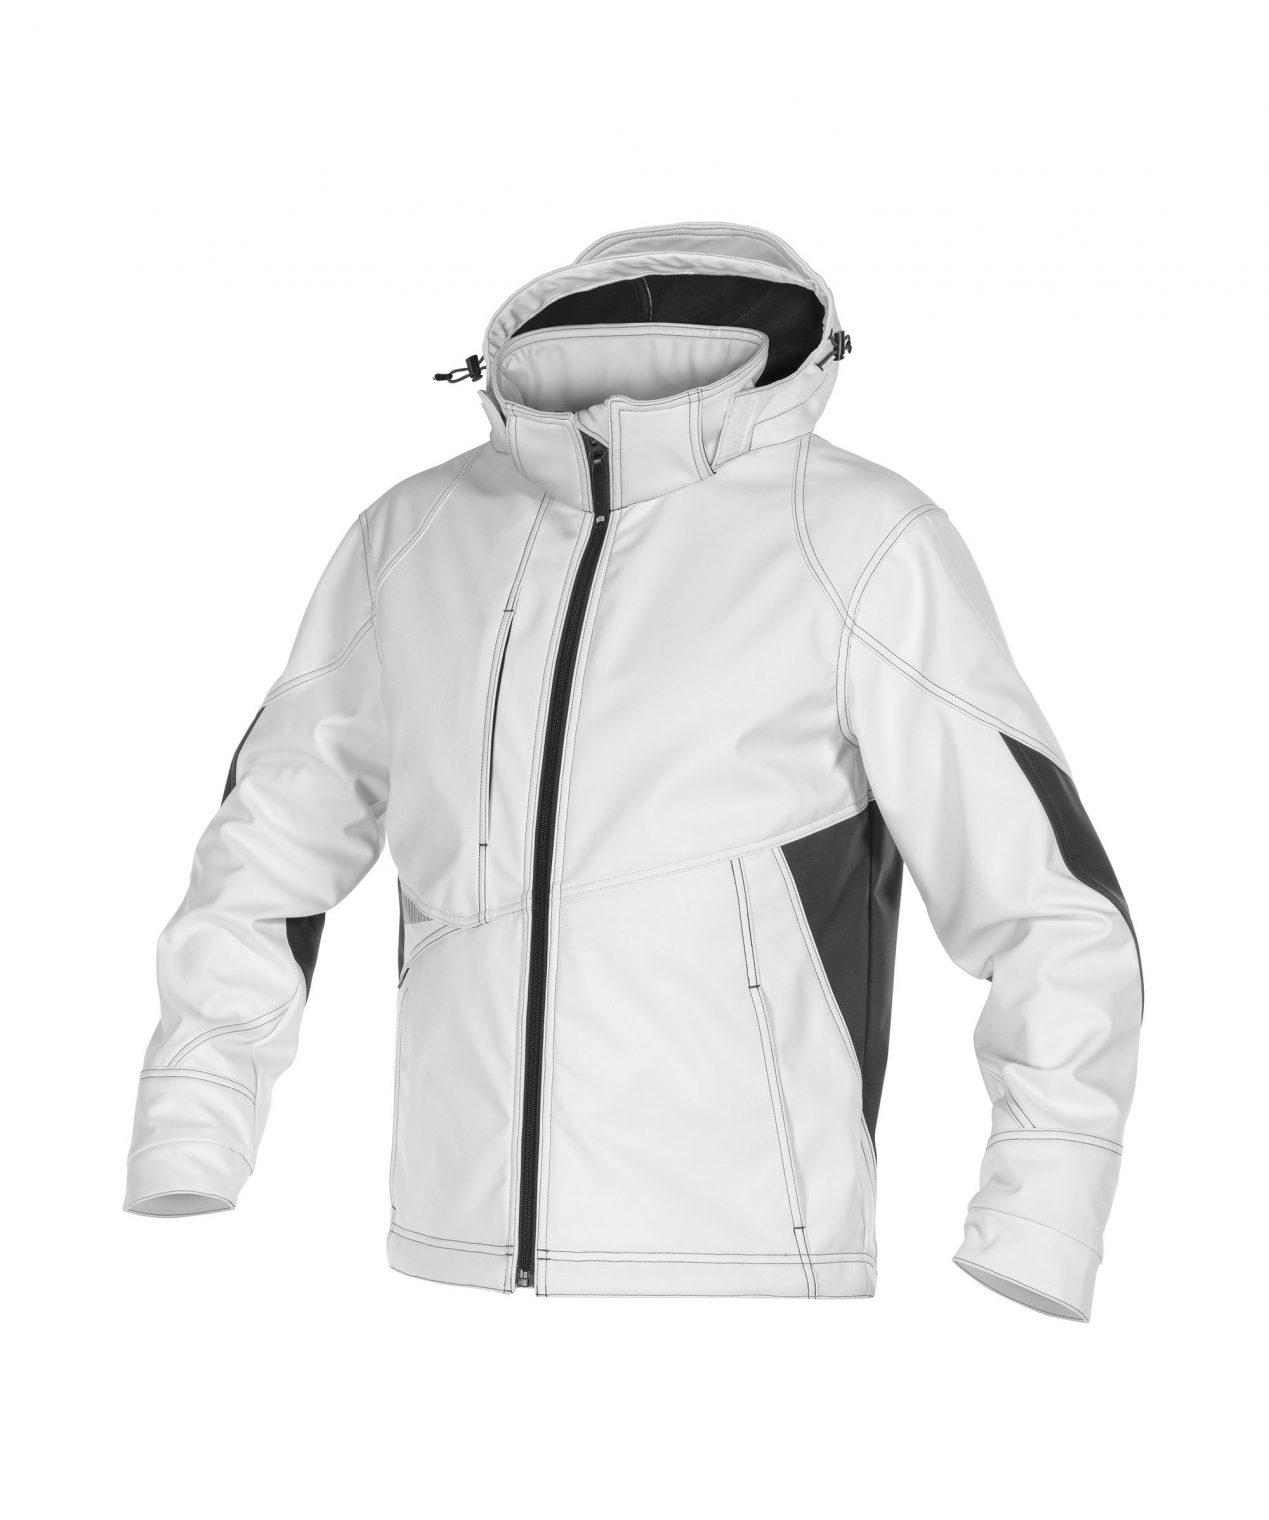 gravity softshell jacket white anthracite grey front